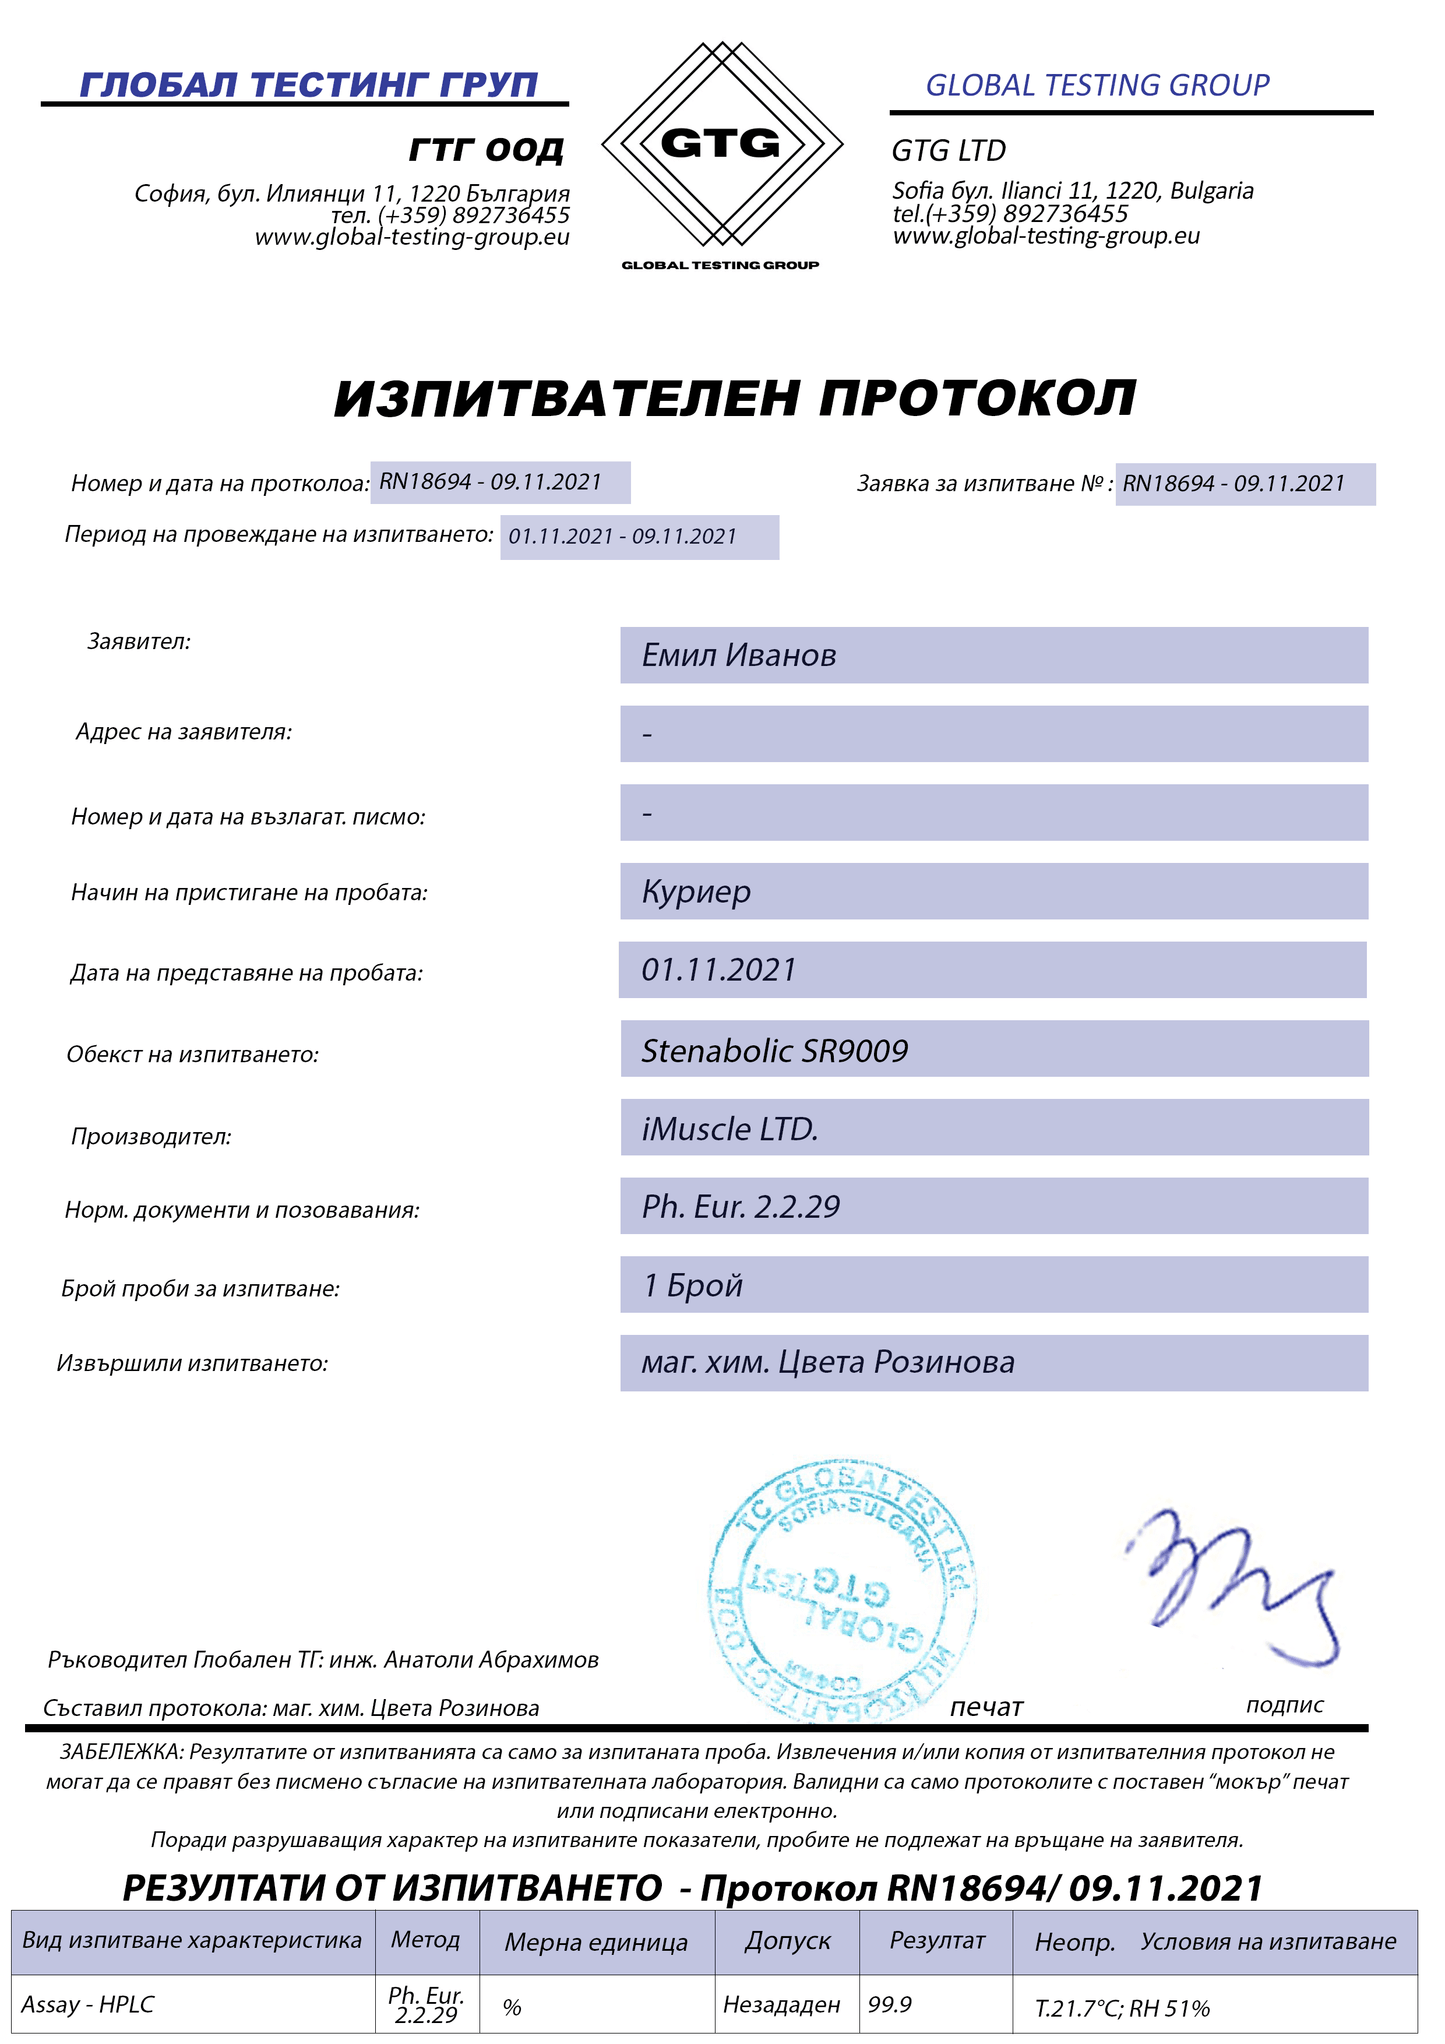 SARM Stenabolic SR-9009 quality certificate